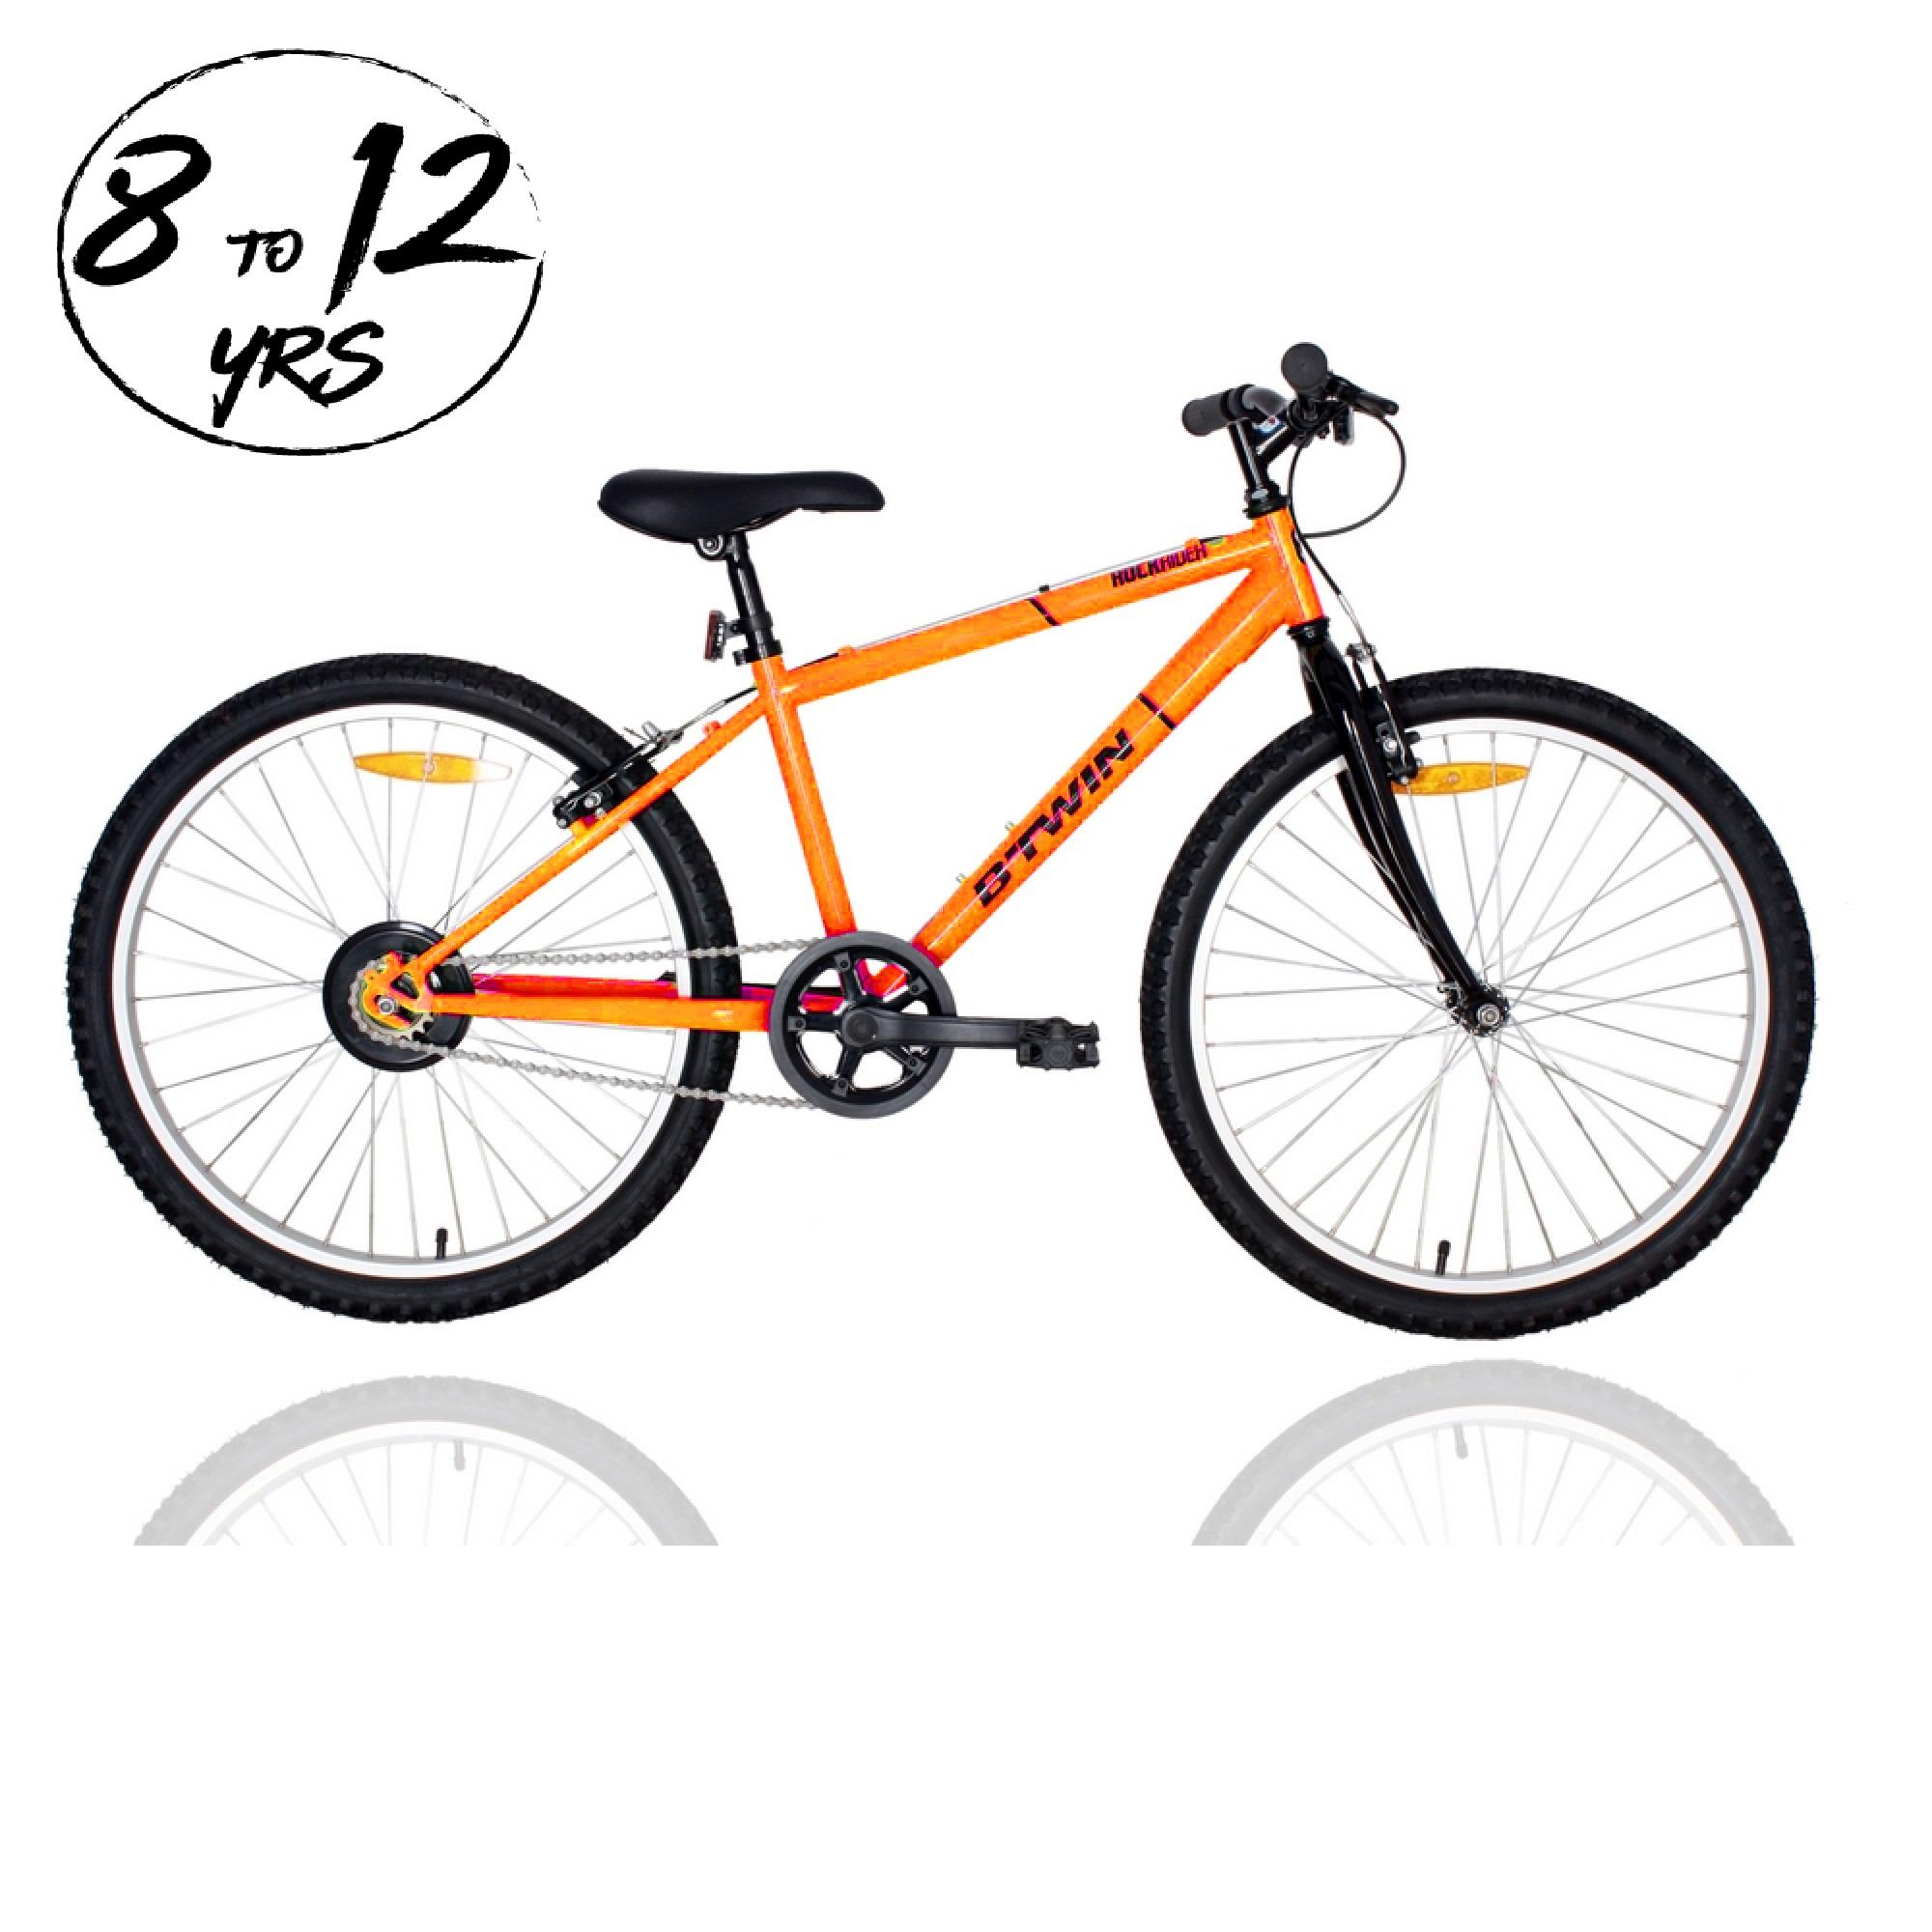 btwin orange cycle